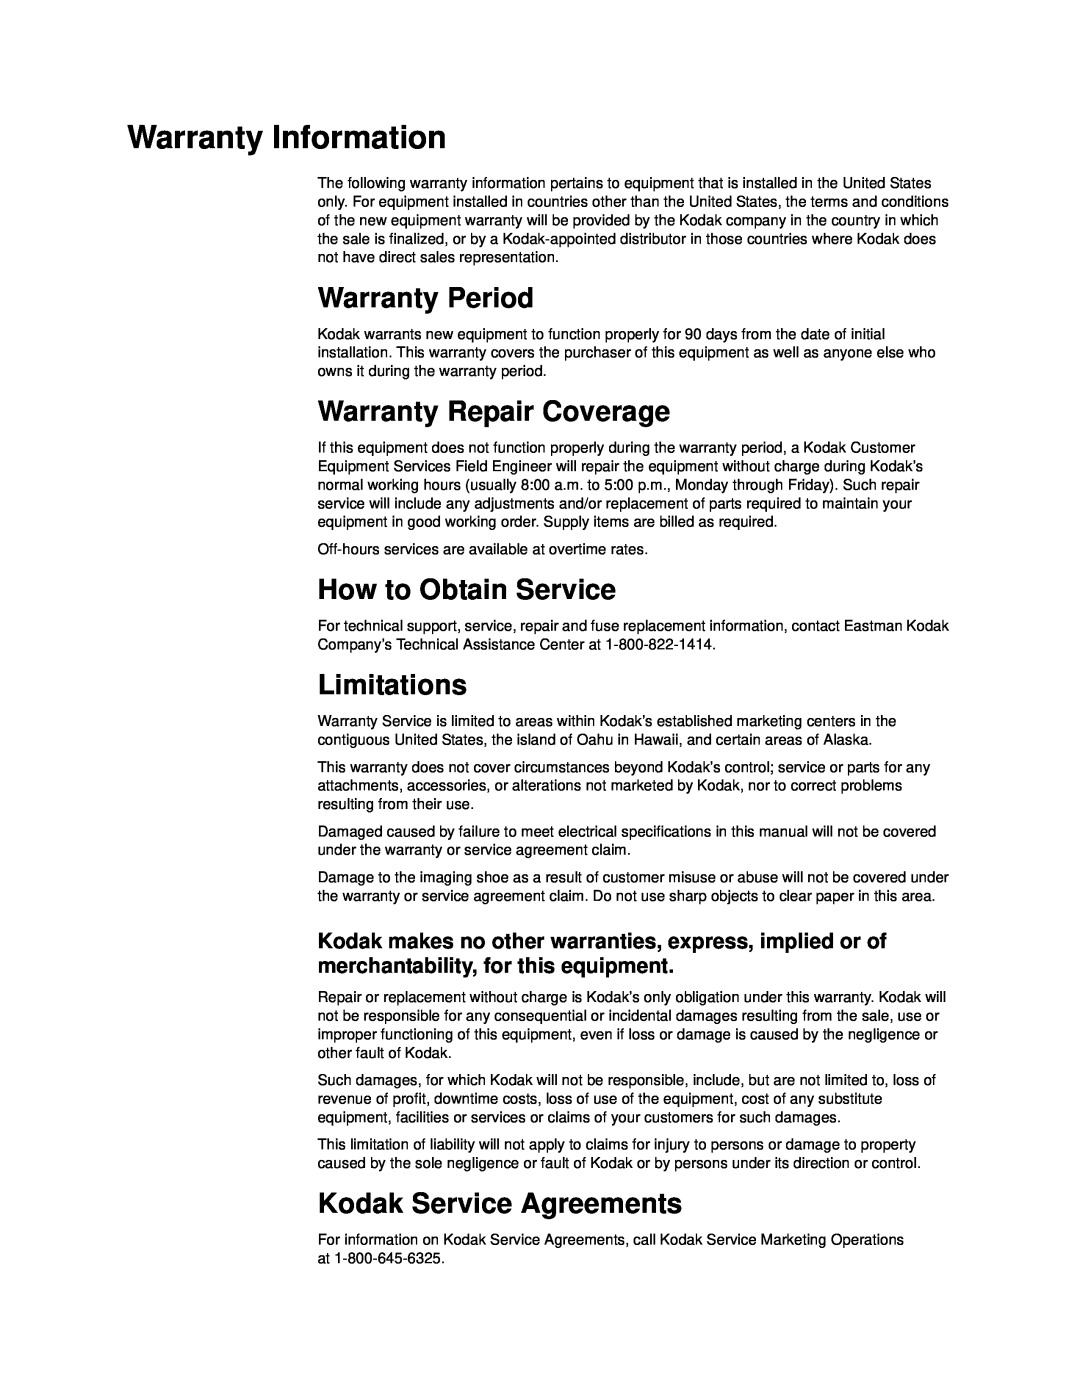 Kodak 20P manual Warranty Information, Warranty Period, Warranty Repair Coverage, How to Obtain Service, Limitations 